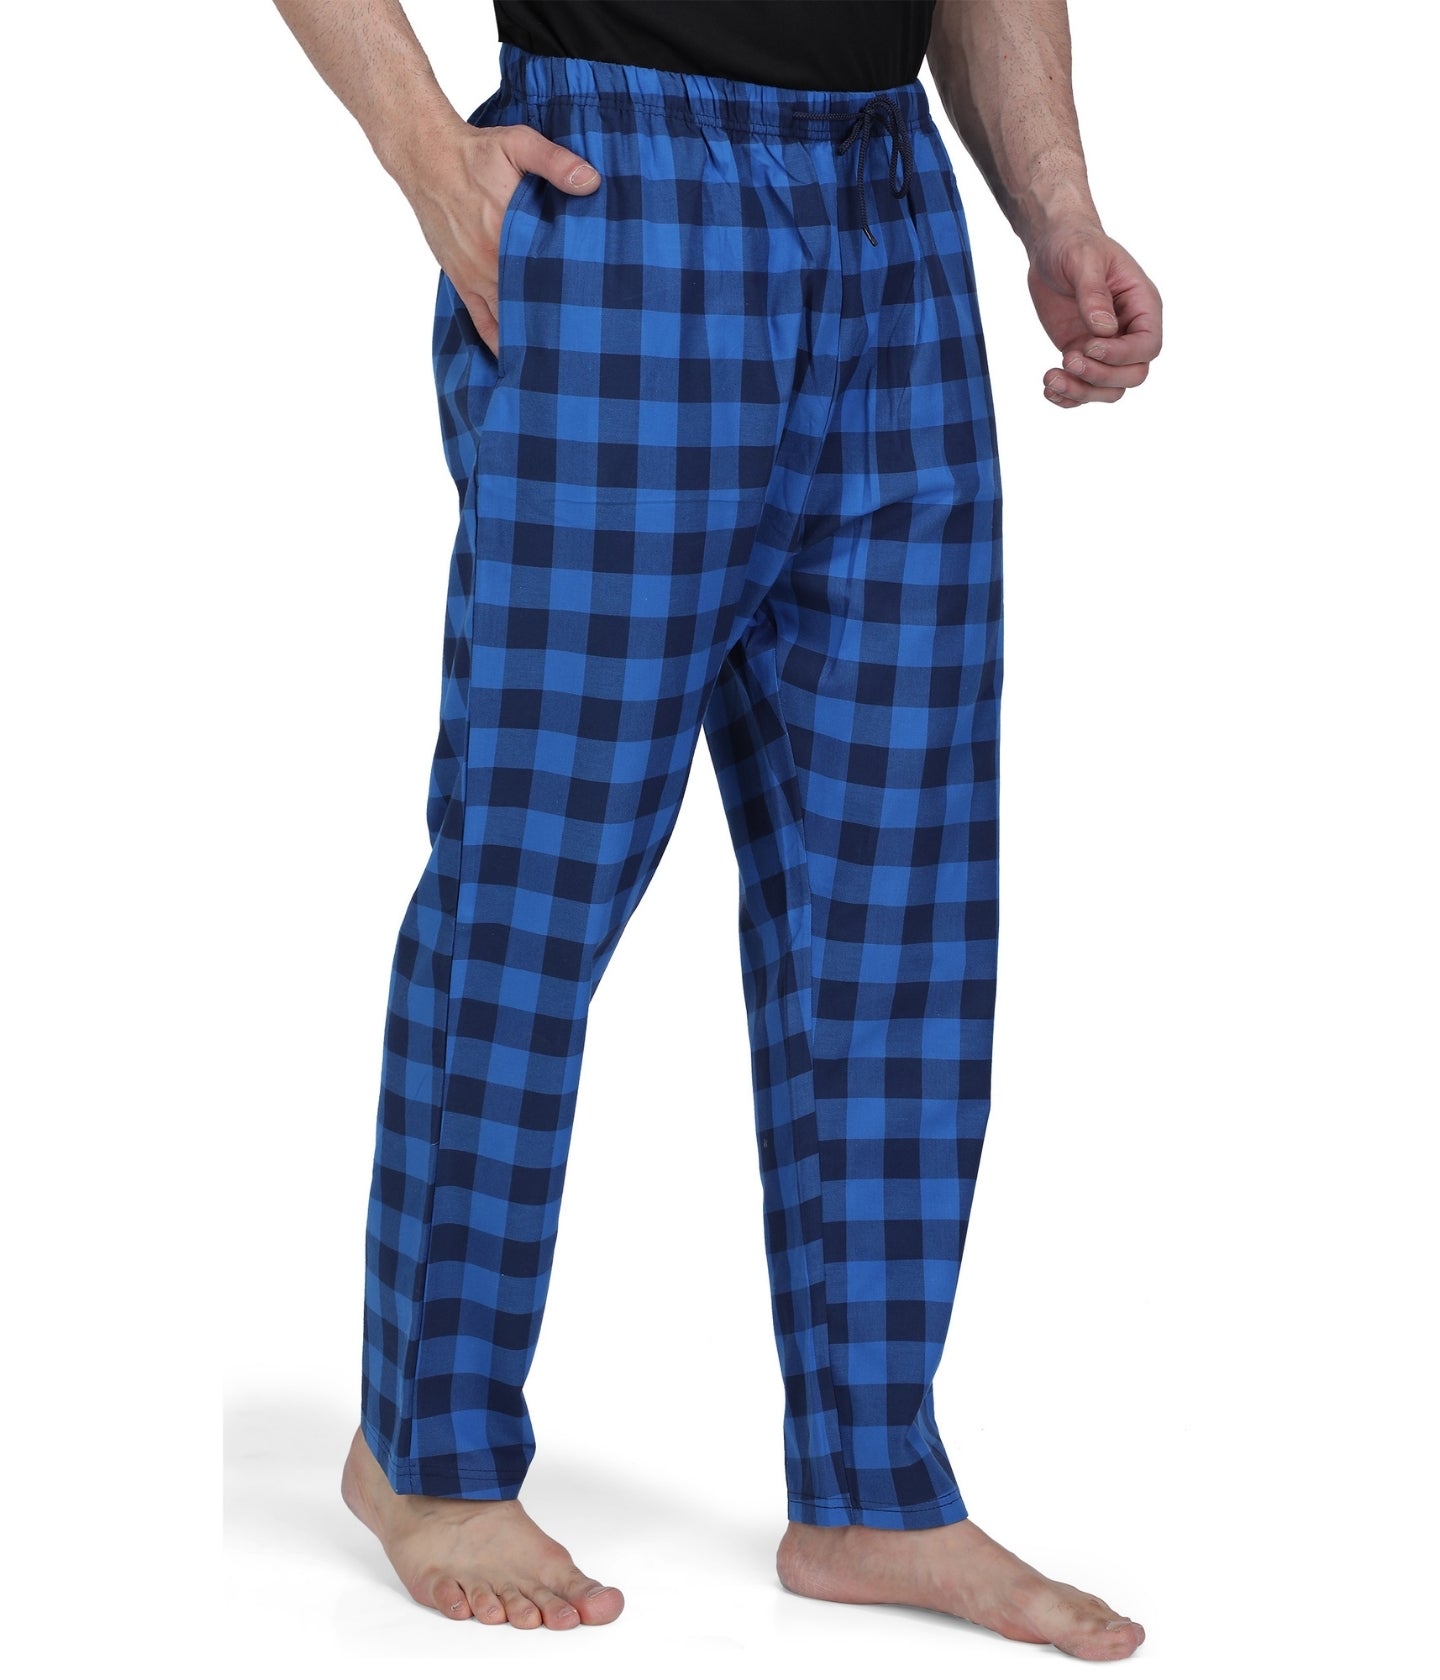 Xysaqa Men's Pants, Mens Cotton Lounge Jogger Pants Men Solid Comfy Pajama  Sleep Pant with Drawstring - Walmart.com